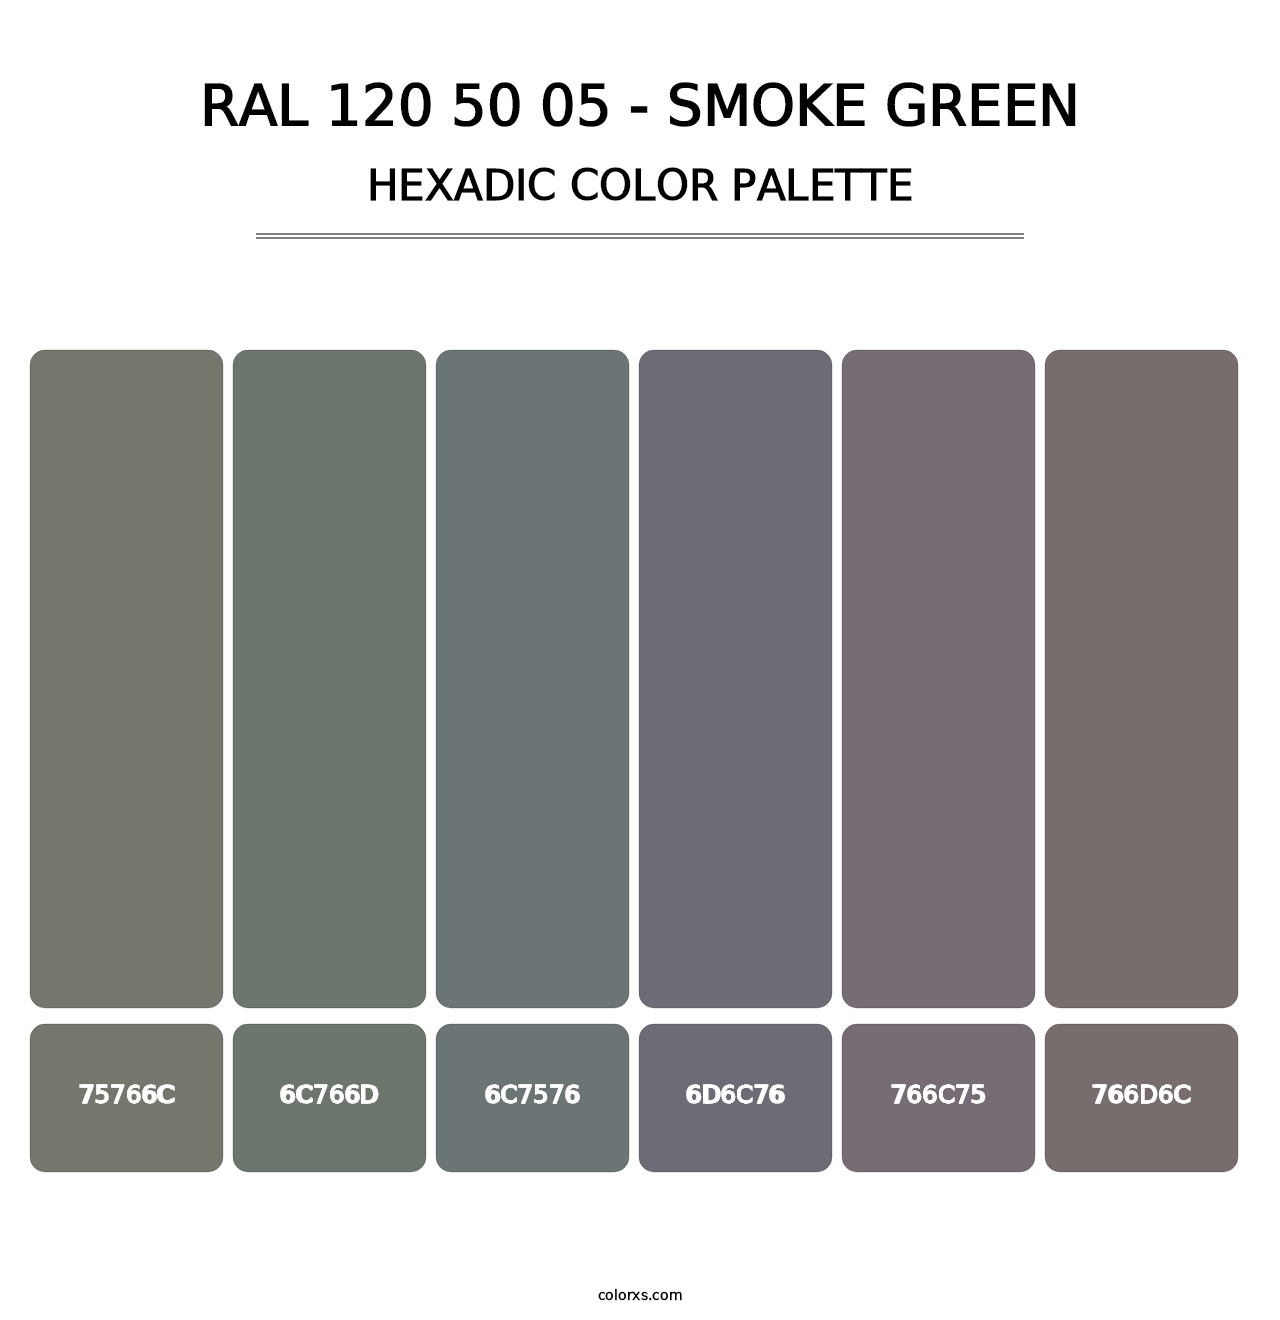 RAL 120 50 05 - Smoke Green - Hexadic Color Palette